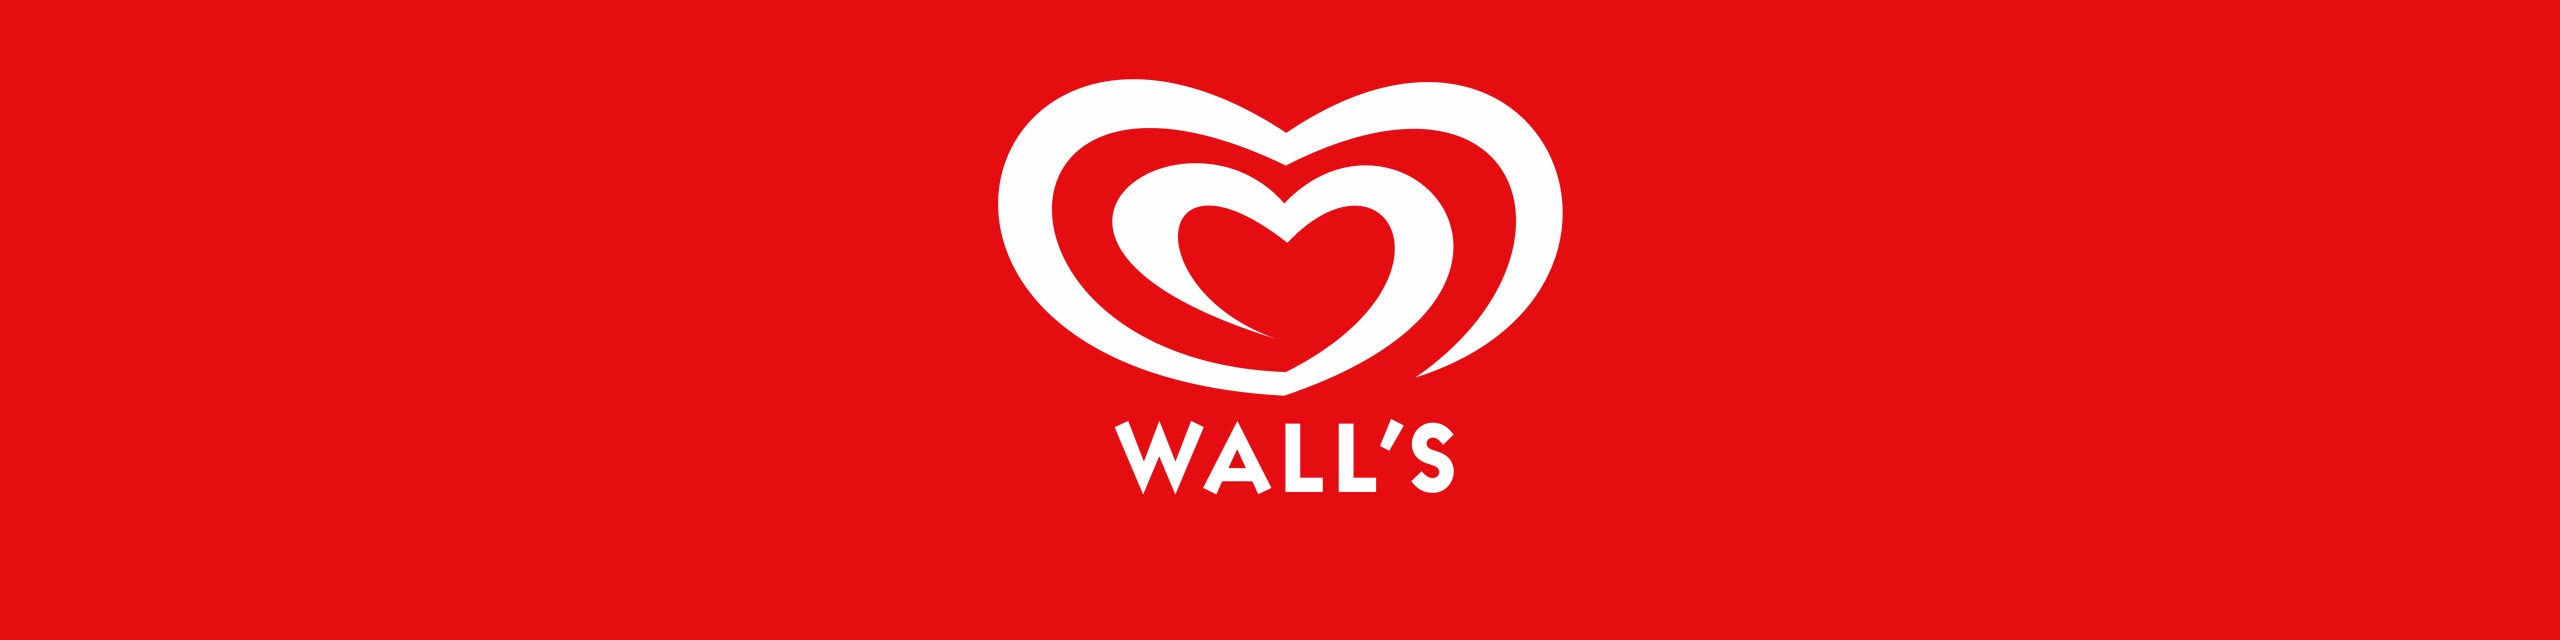 Tentang Wall's